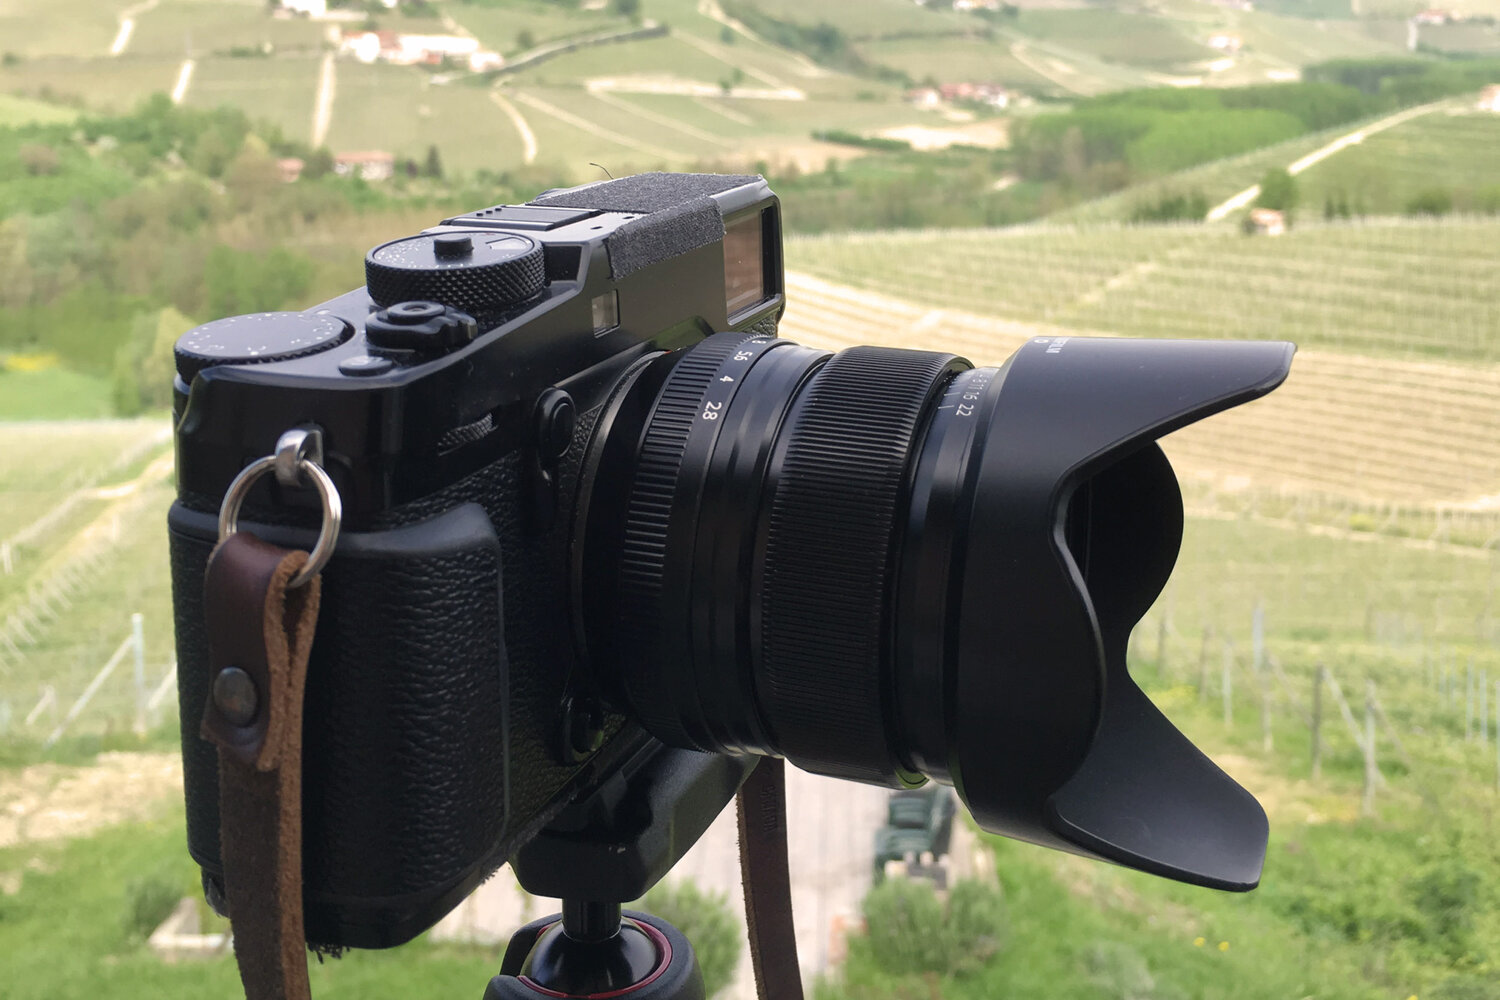 Fujifilm X-Pro2 mirrorless camera with the Fujifilm XF 14mm f/2.8 R lens